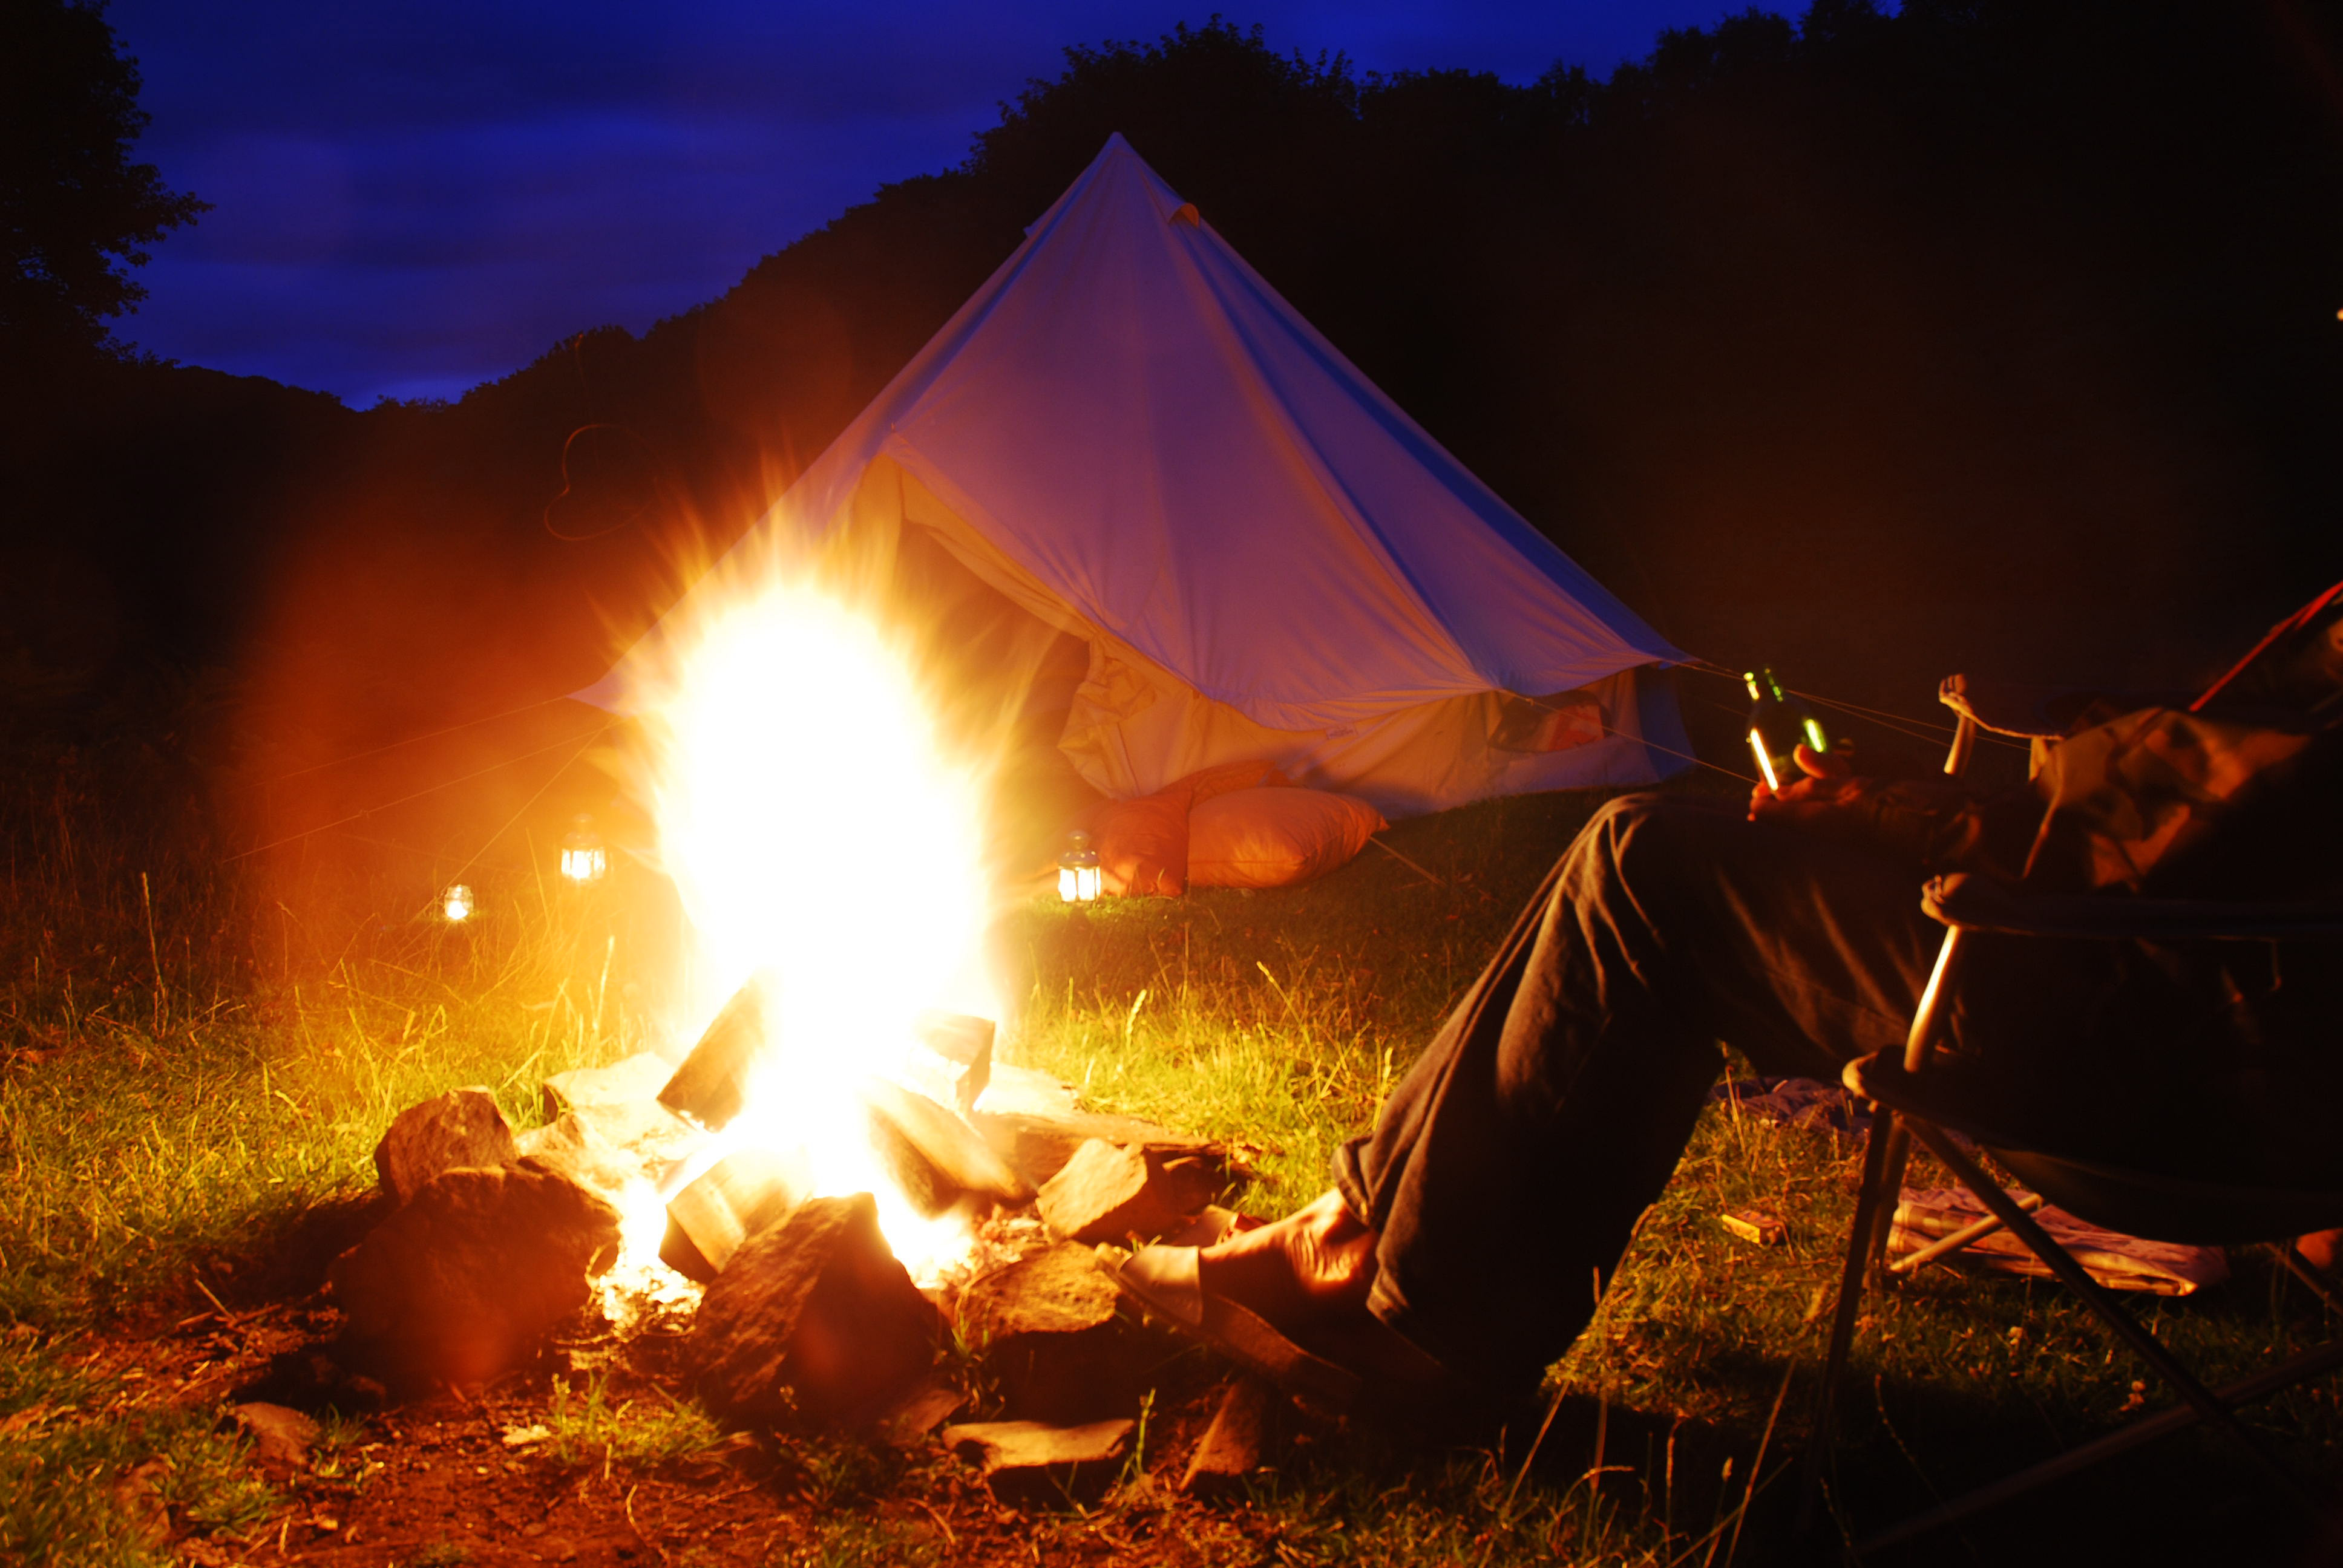 Tent Camping - Graig Wen